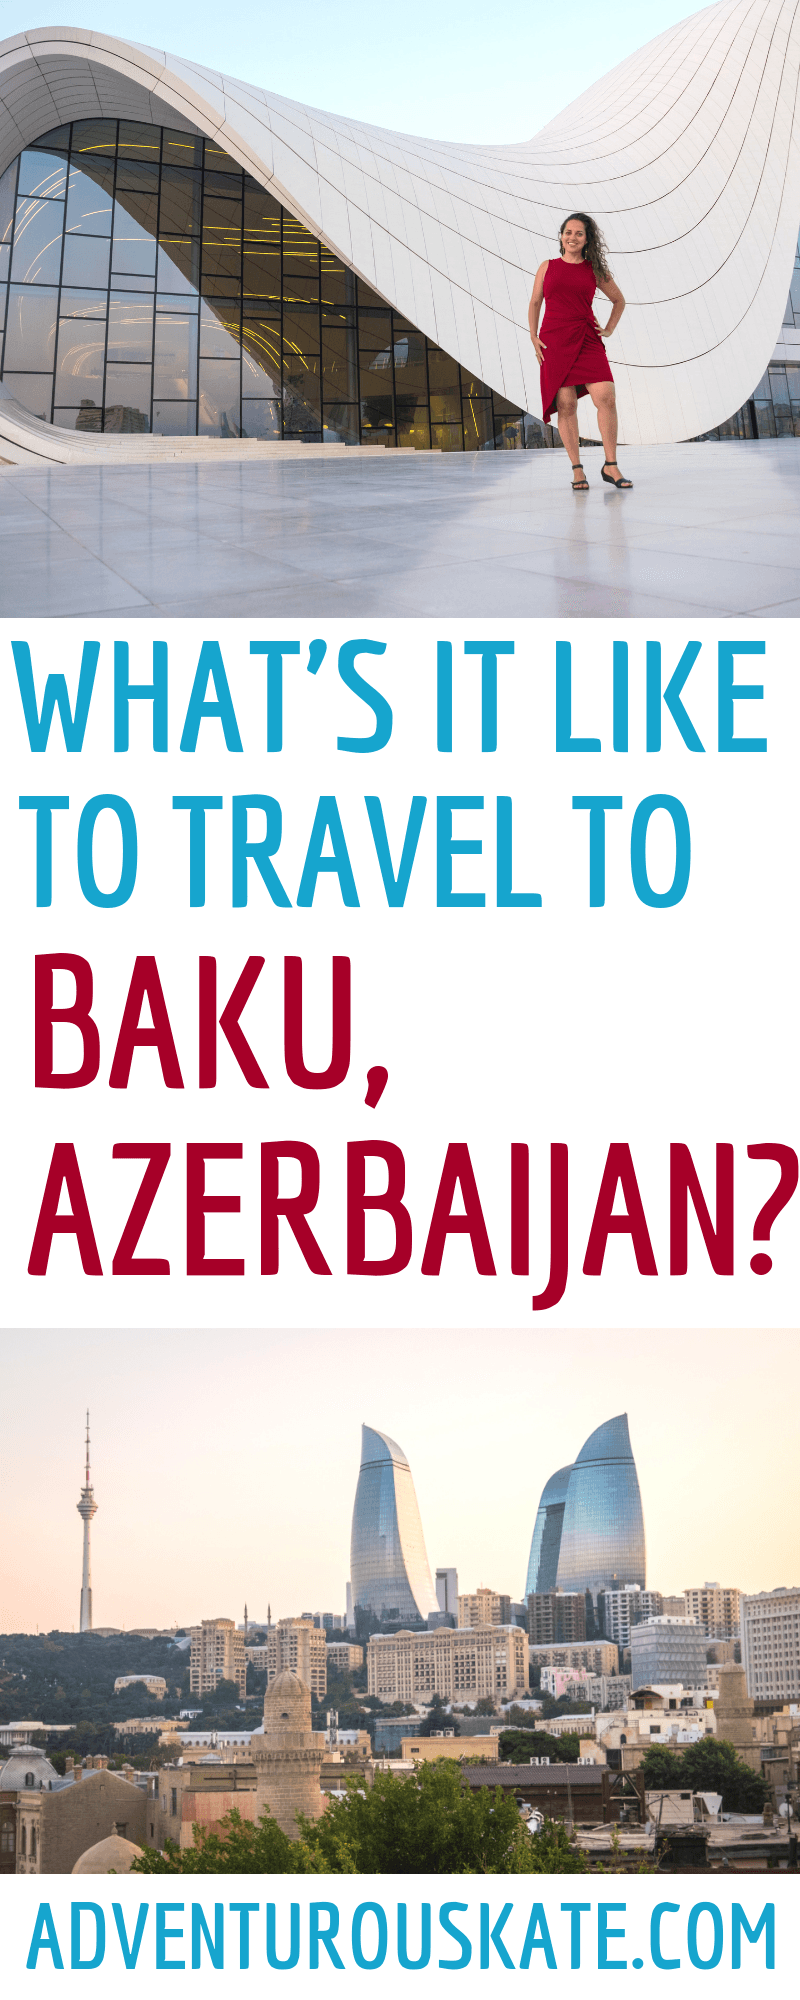 tourism in azerbaijan essay